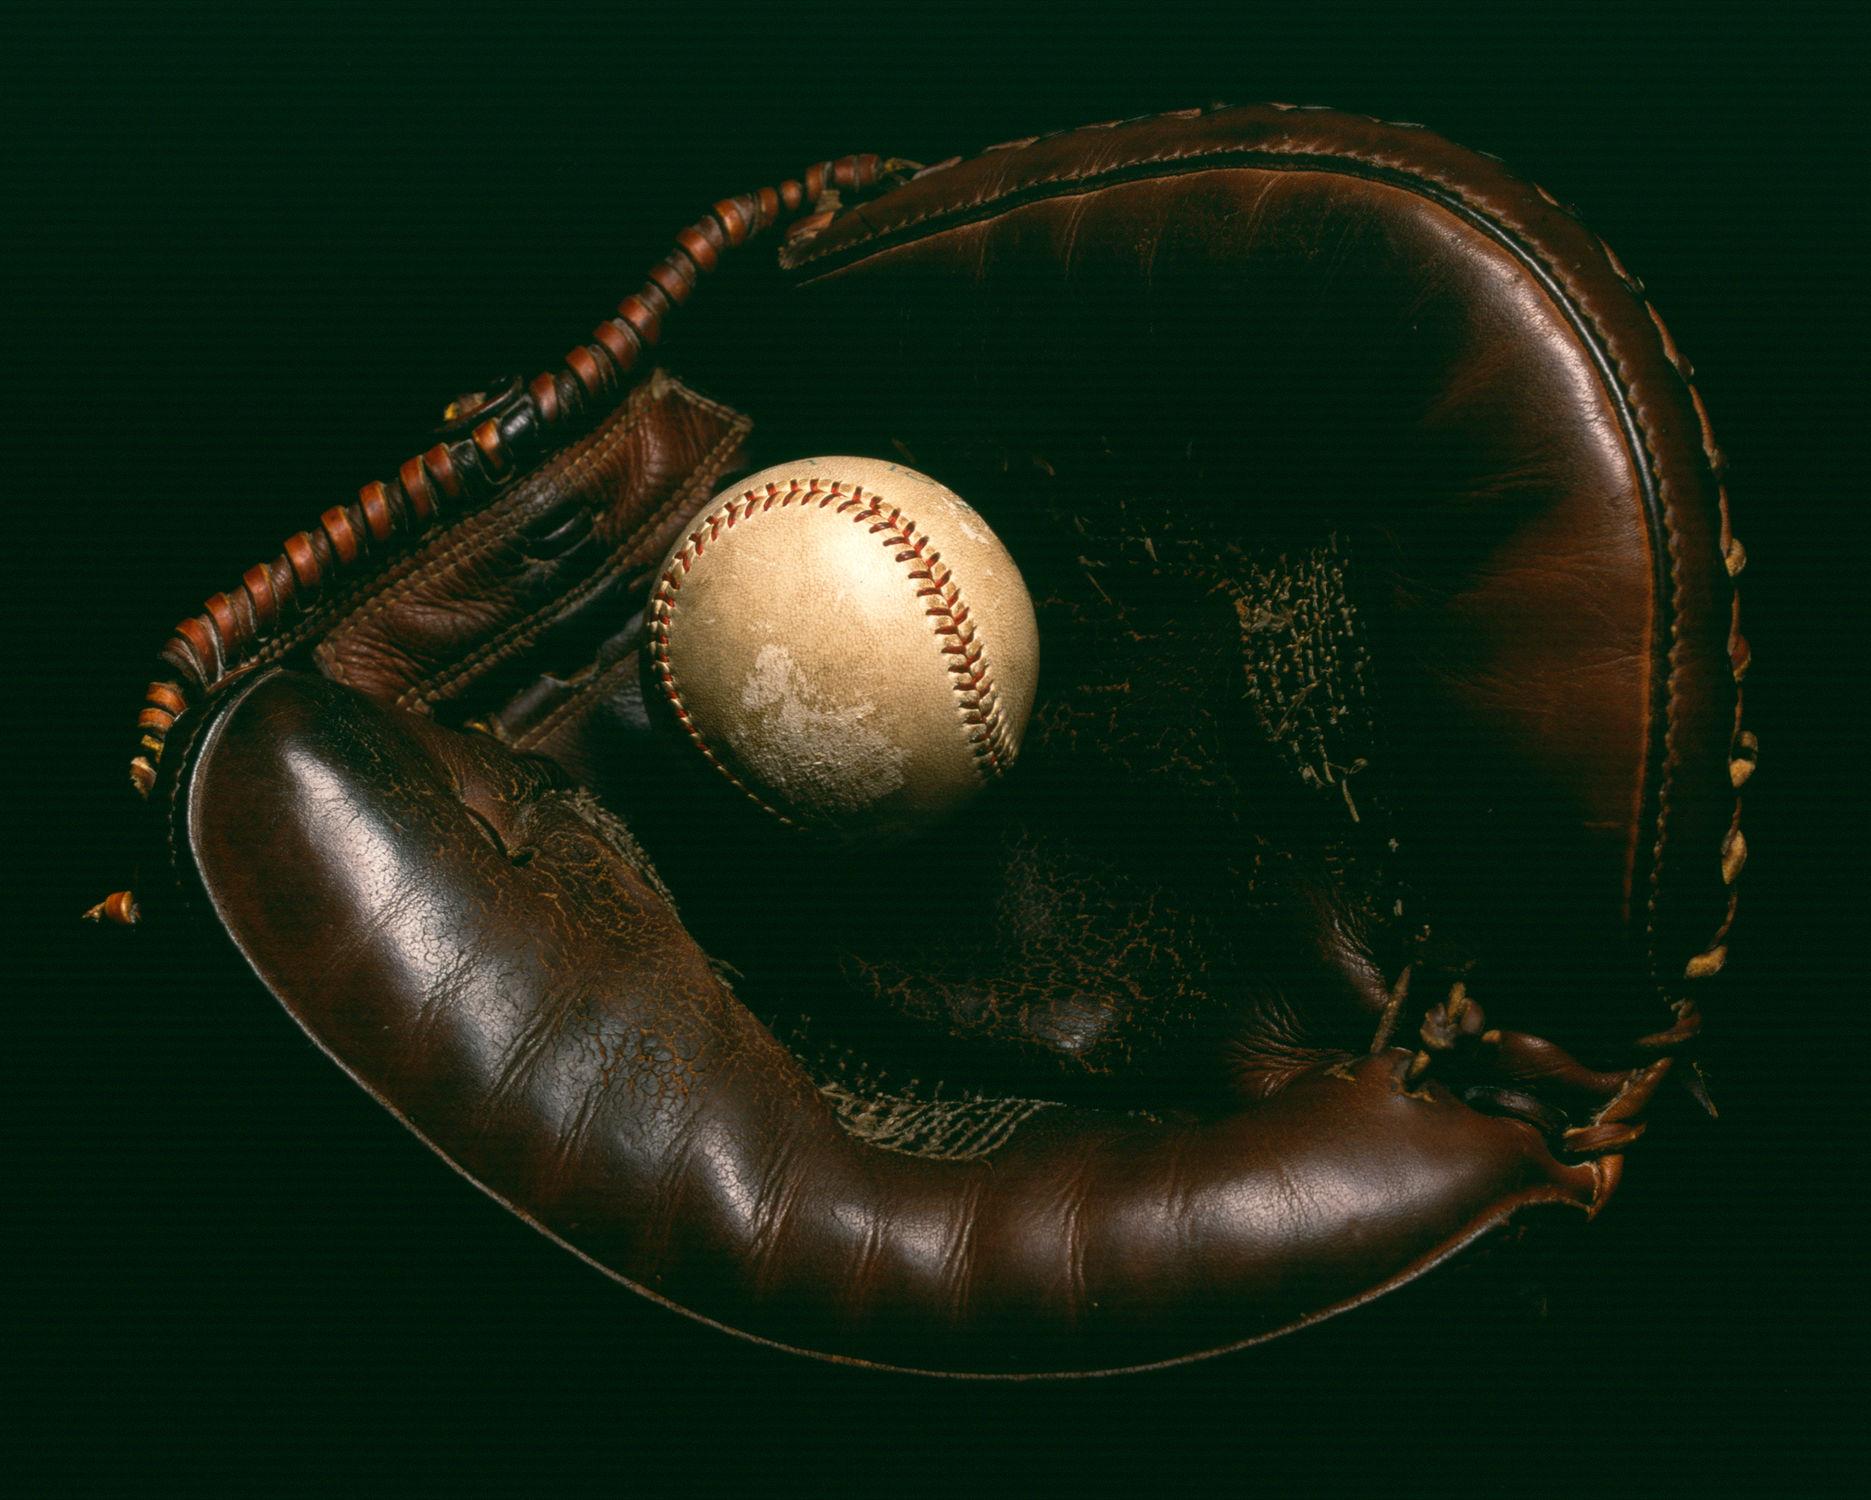 Perfect game (baseball) - Wikipedia